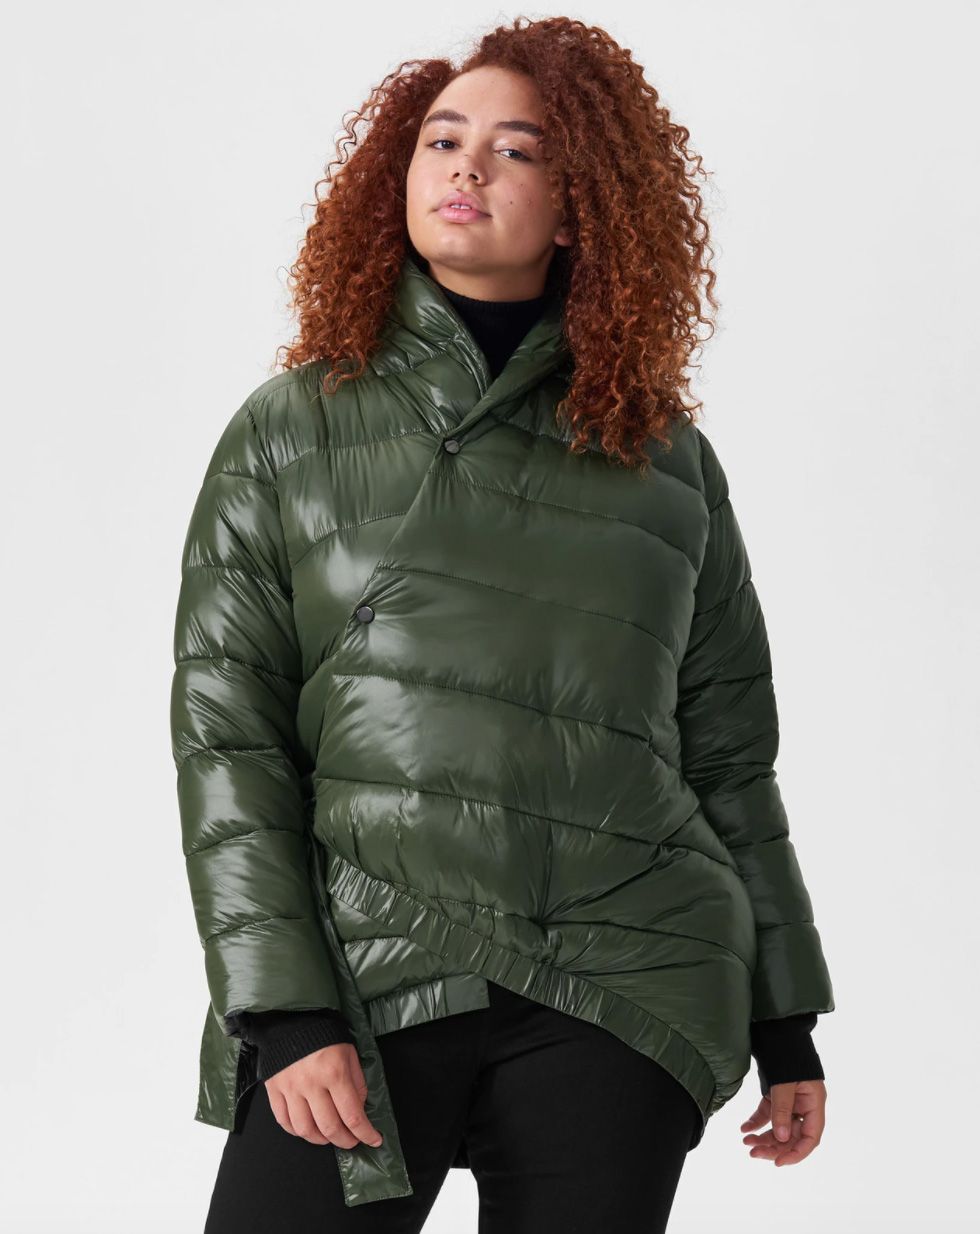 TIMEMEANS Fashion Women Plus Size Jacket Coat Winter Warm Collar Hooded Denim Trench Parka Outwear M-7XL